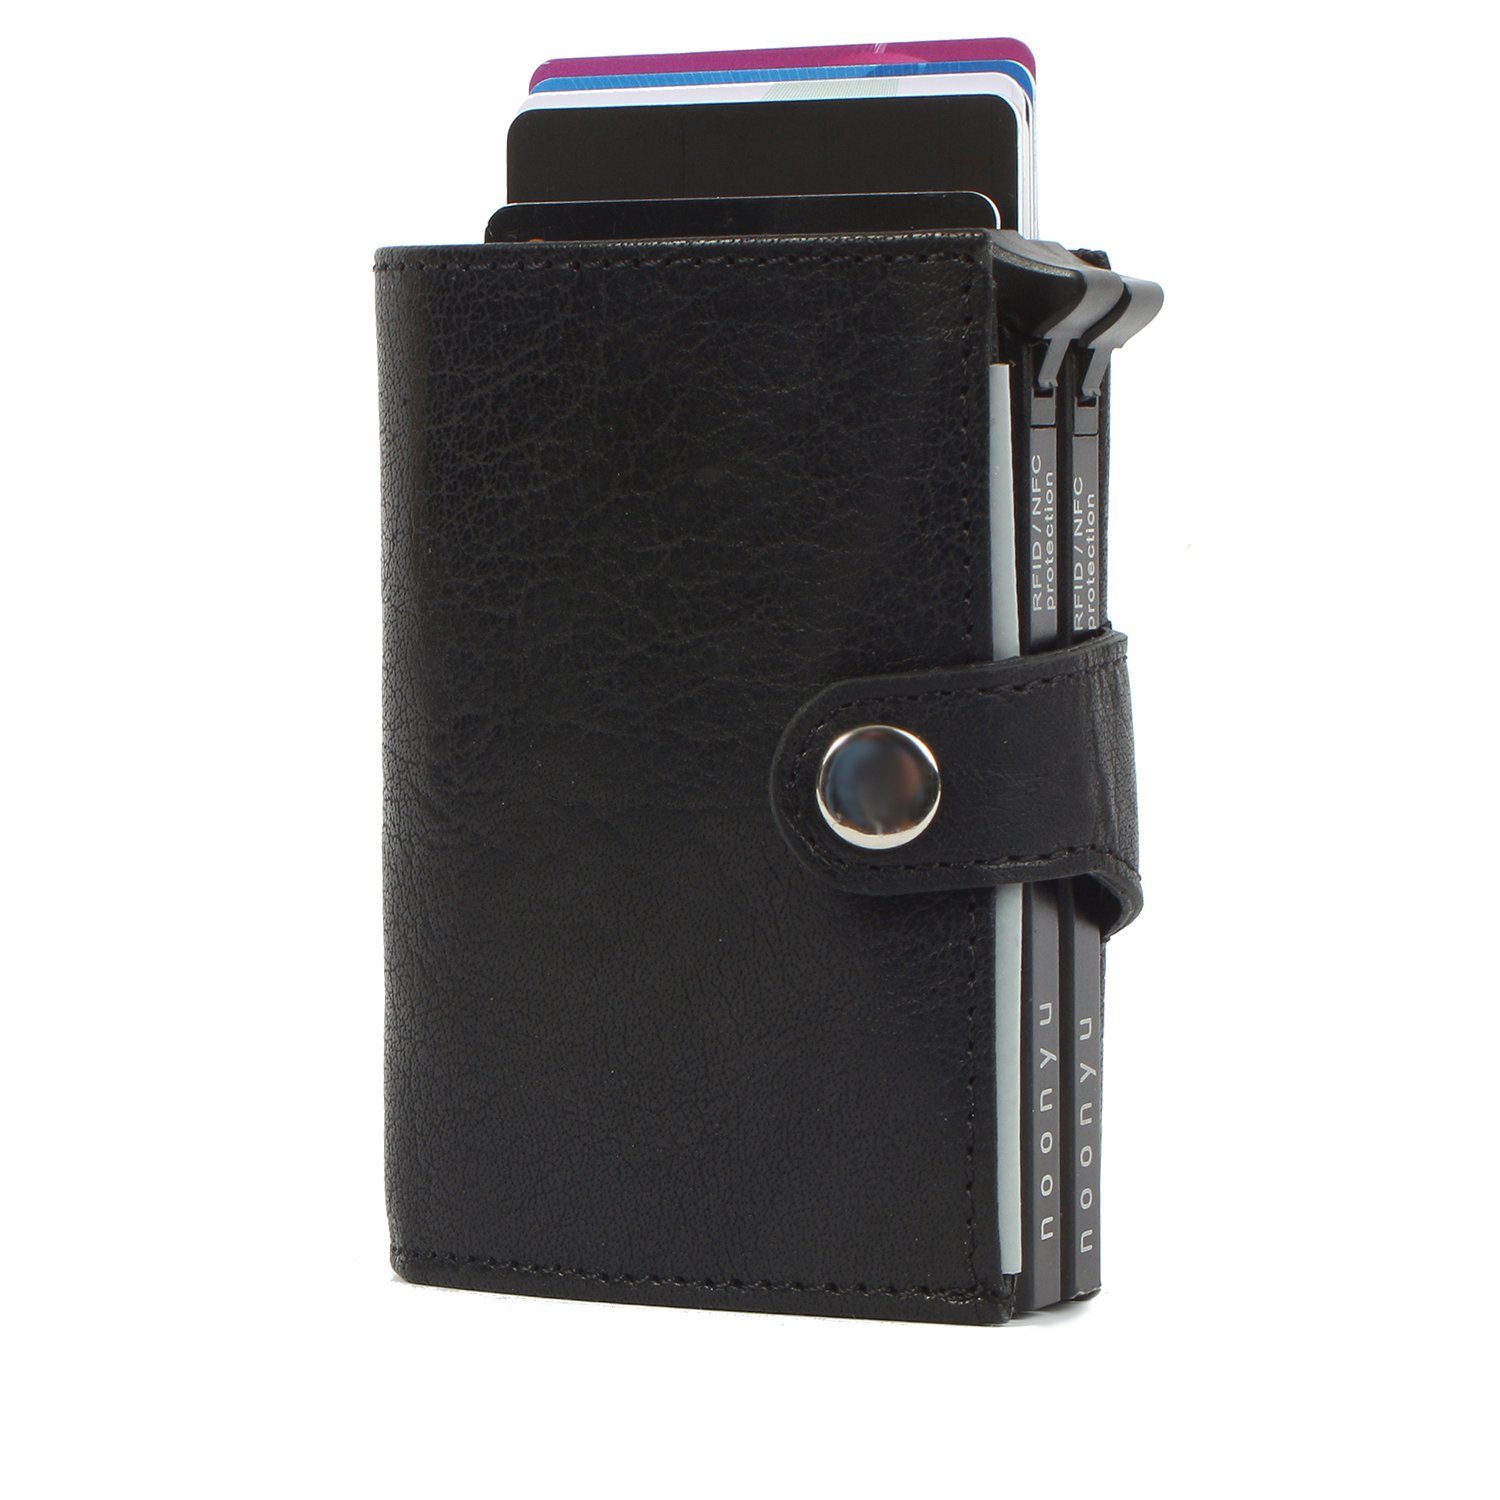 Mini leather, aus Margelisch Upcycling Kreditkartenbörse double RFID noonyu deepblack Leder Geldbörse